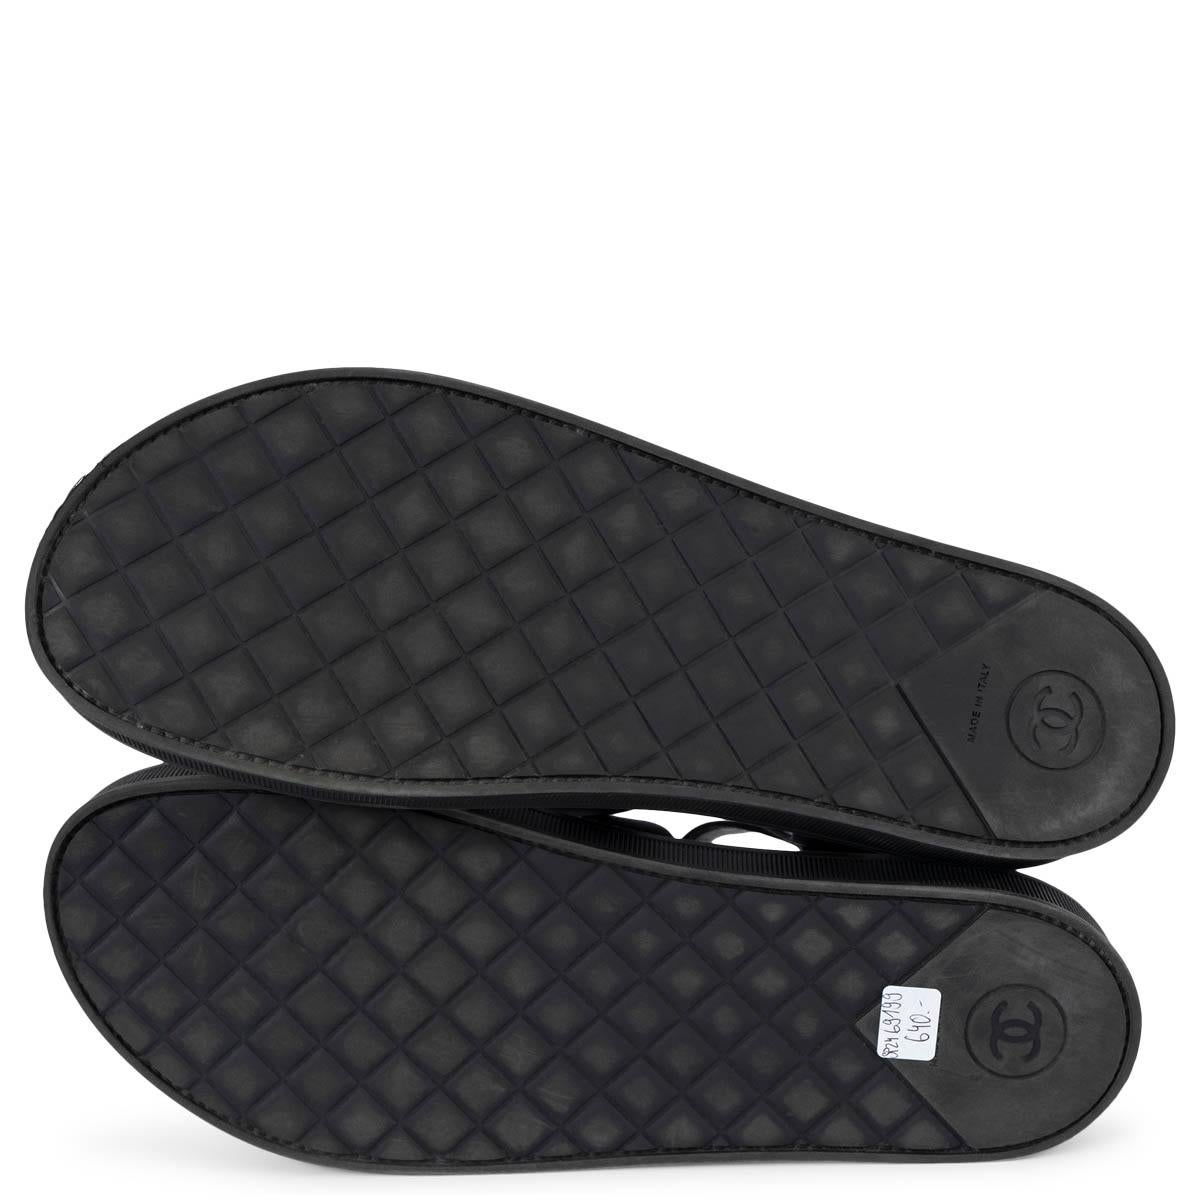 CHANEL black grosgrain 2017 REV PEARL Flat Sandals Shoes 41 fit 40 For Sale 5